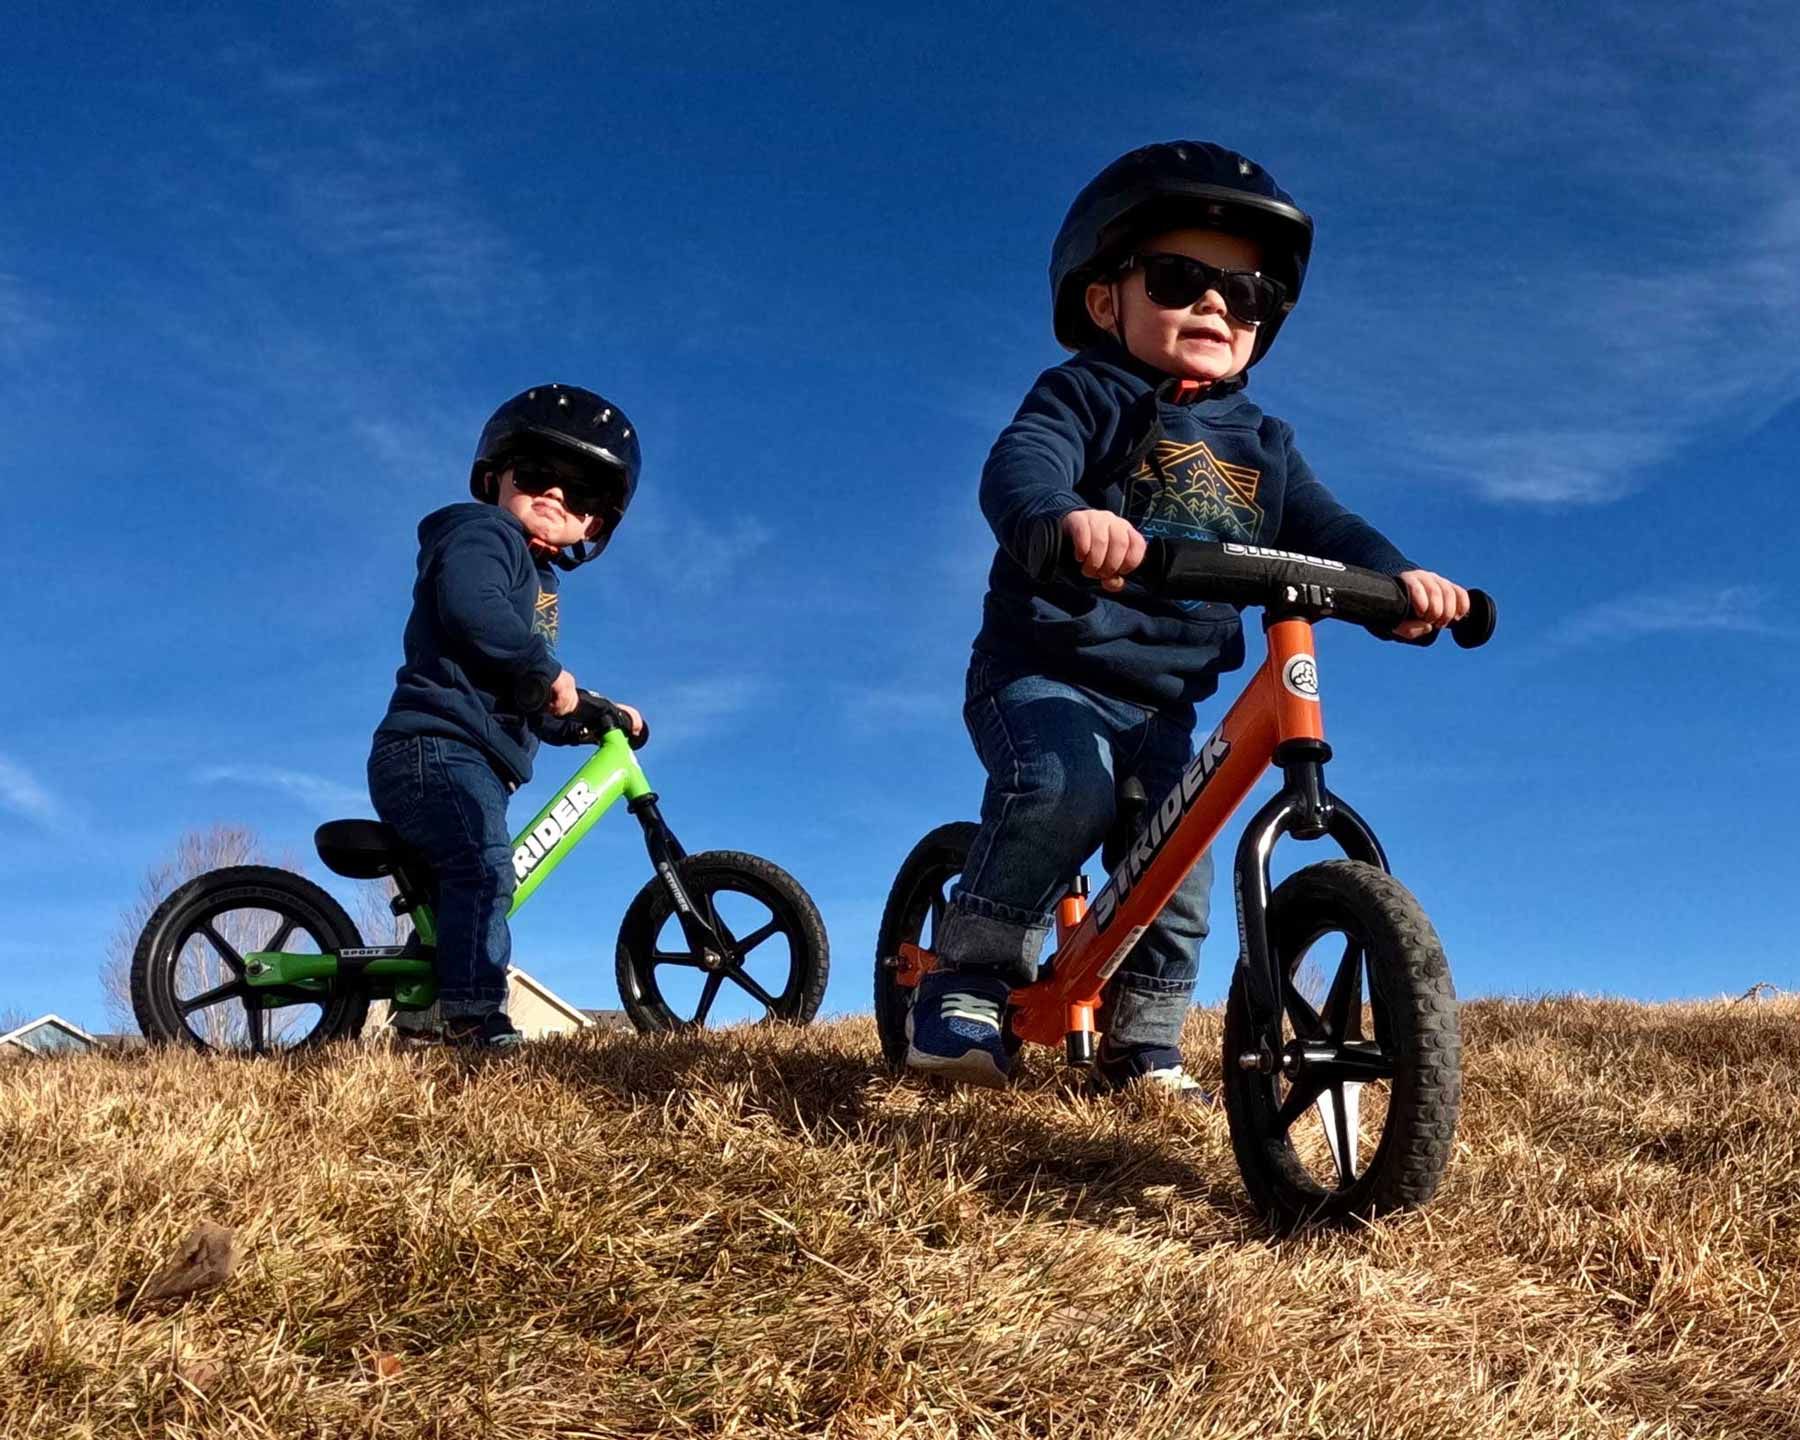 Two kids on Strider 12 Sport balance bikes prepare to go down a grassy hill.